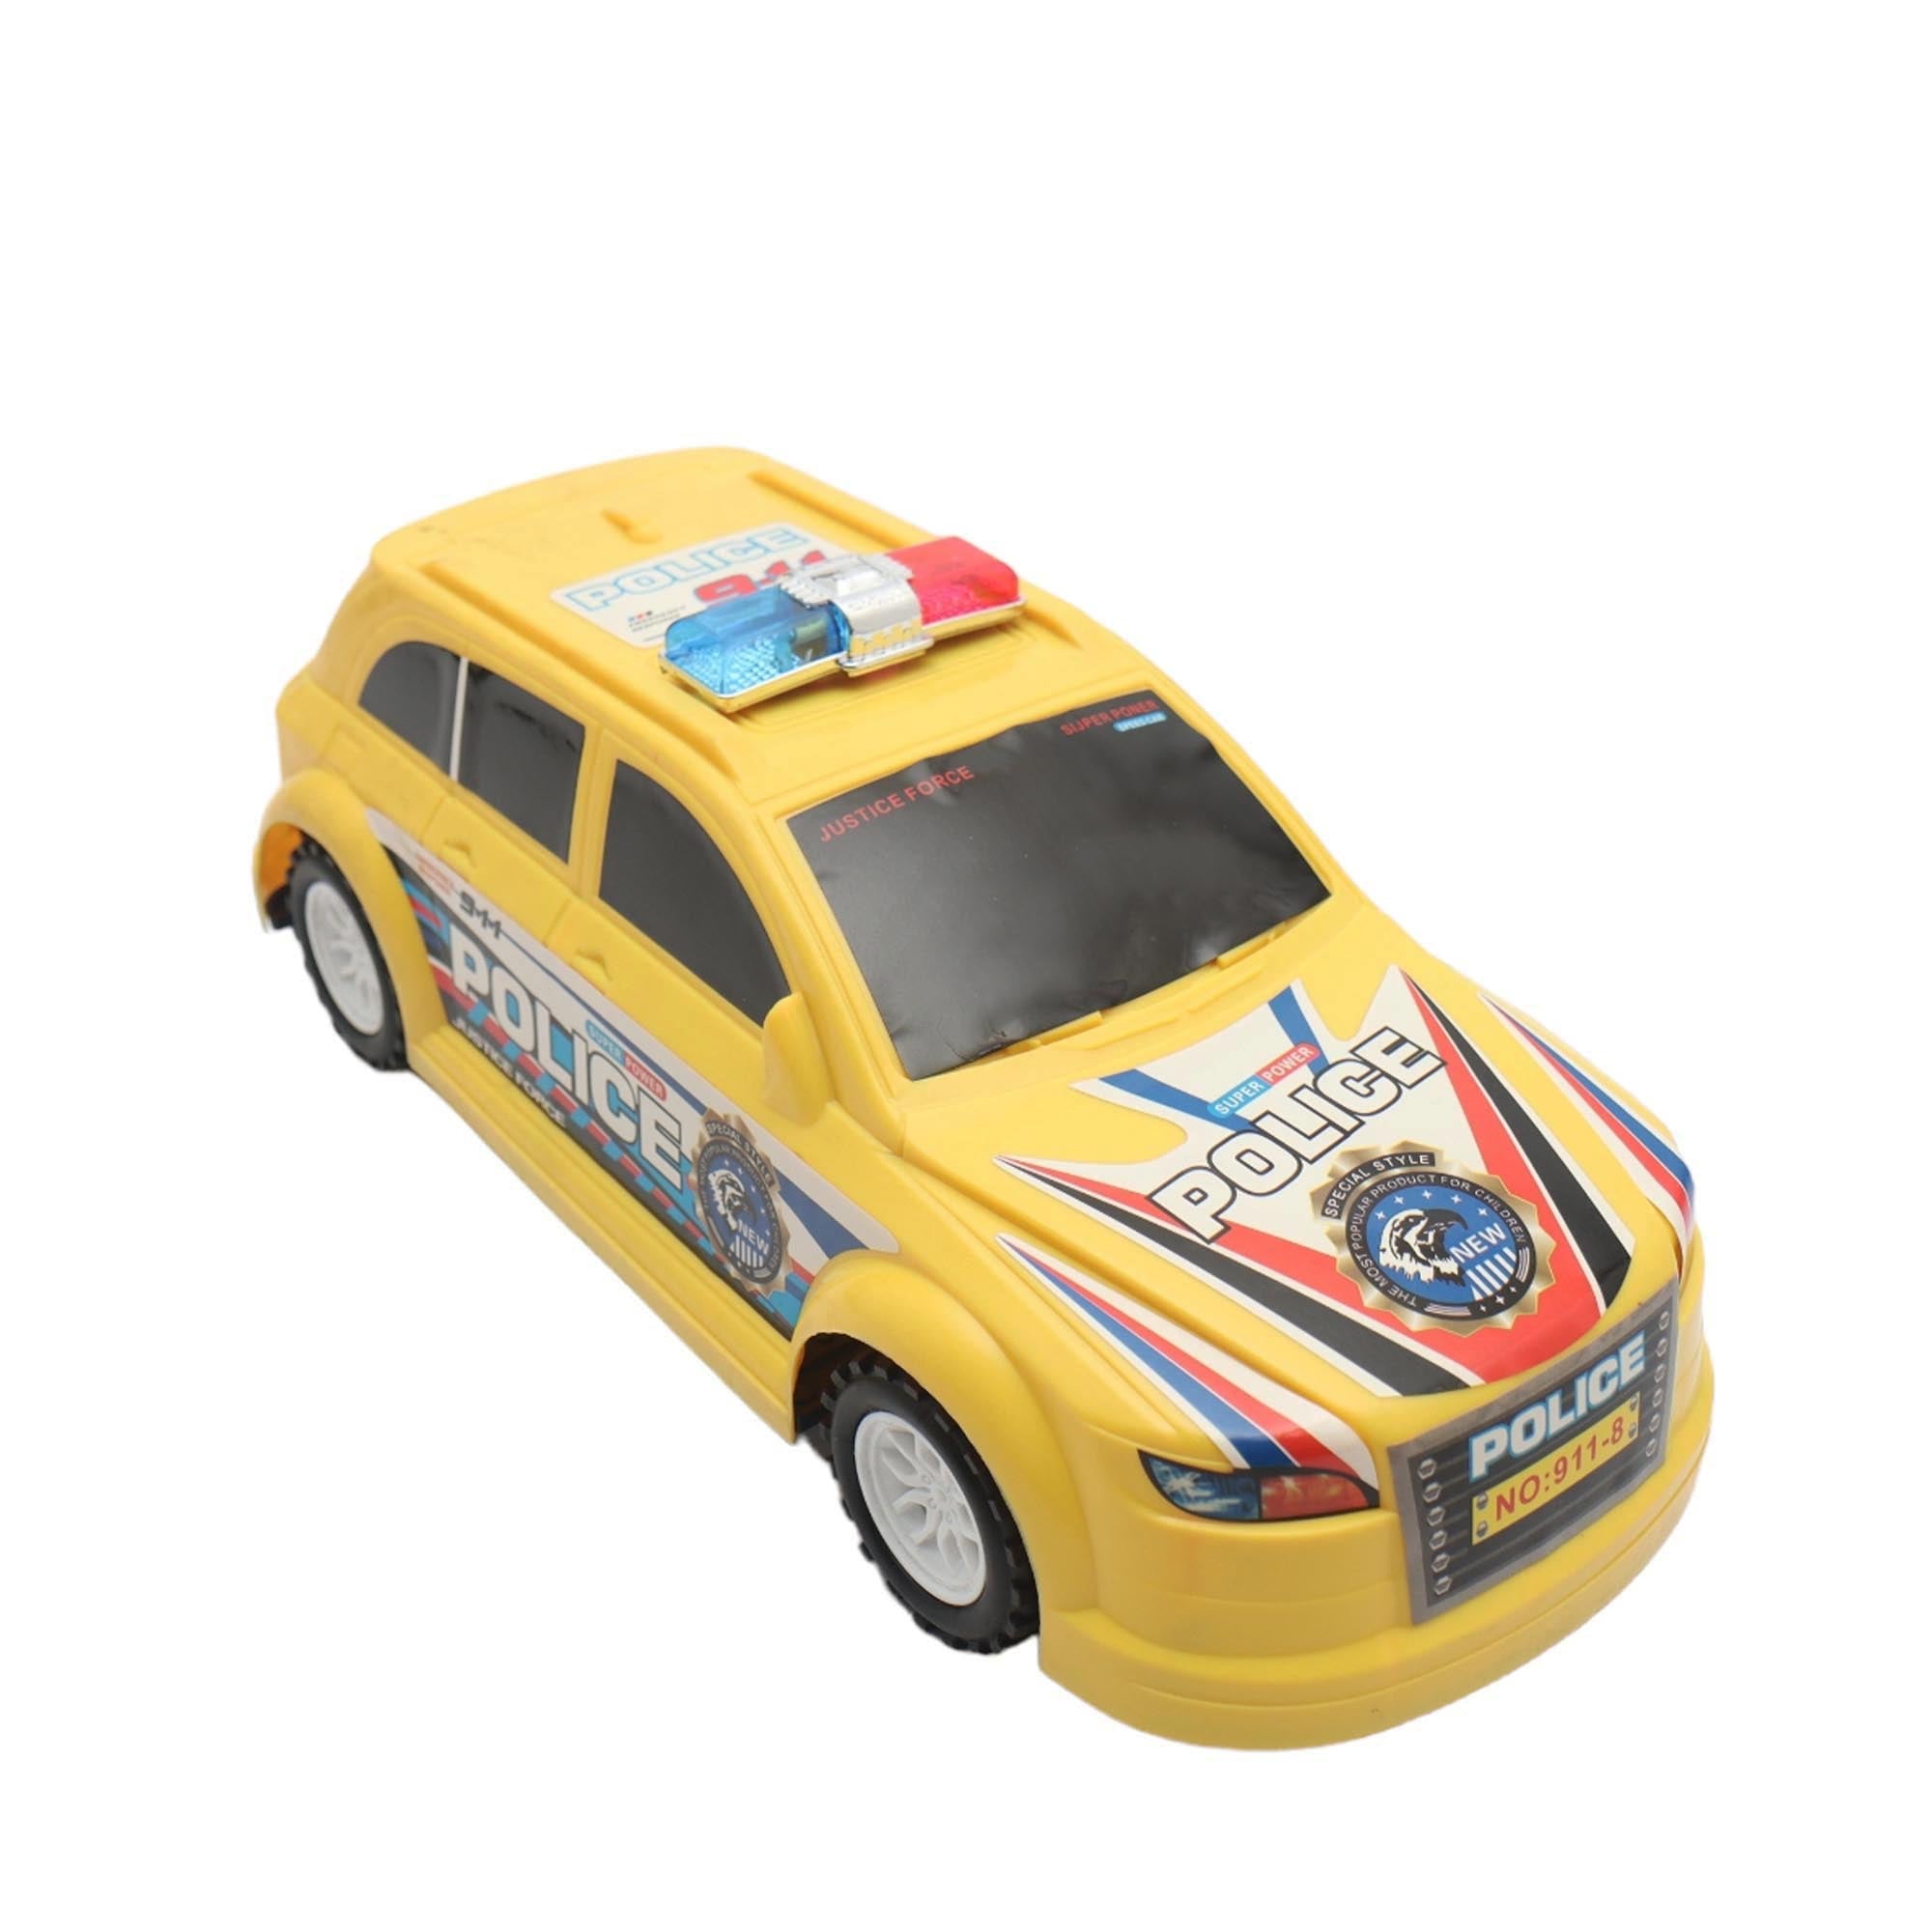 Toy Police Car 33x10cm